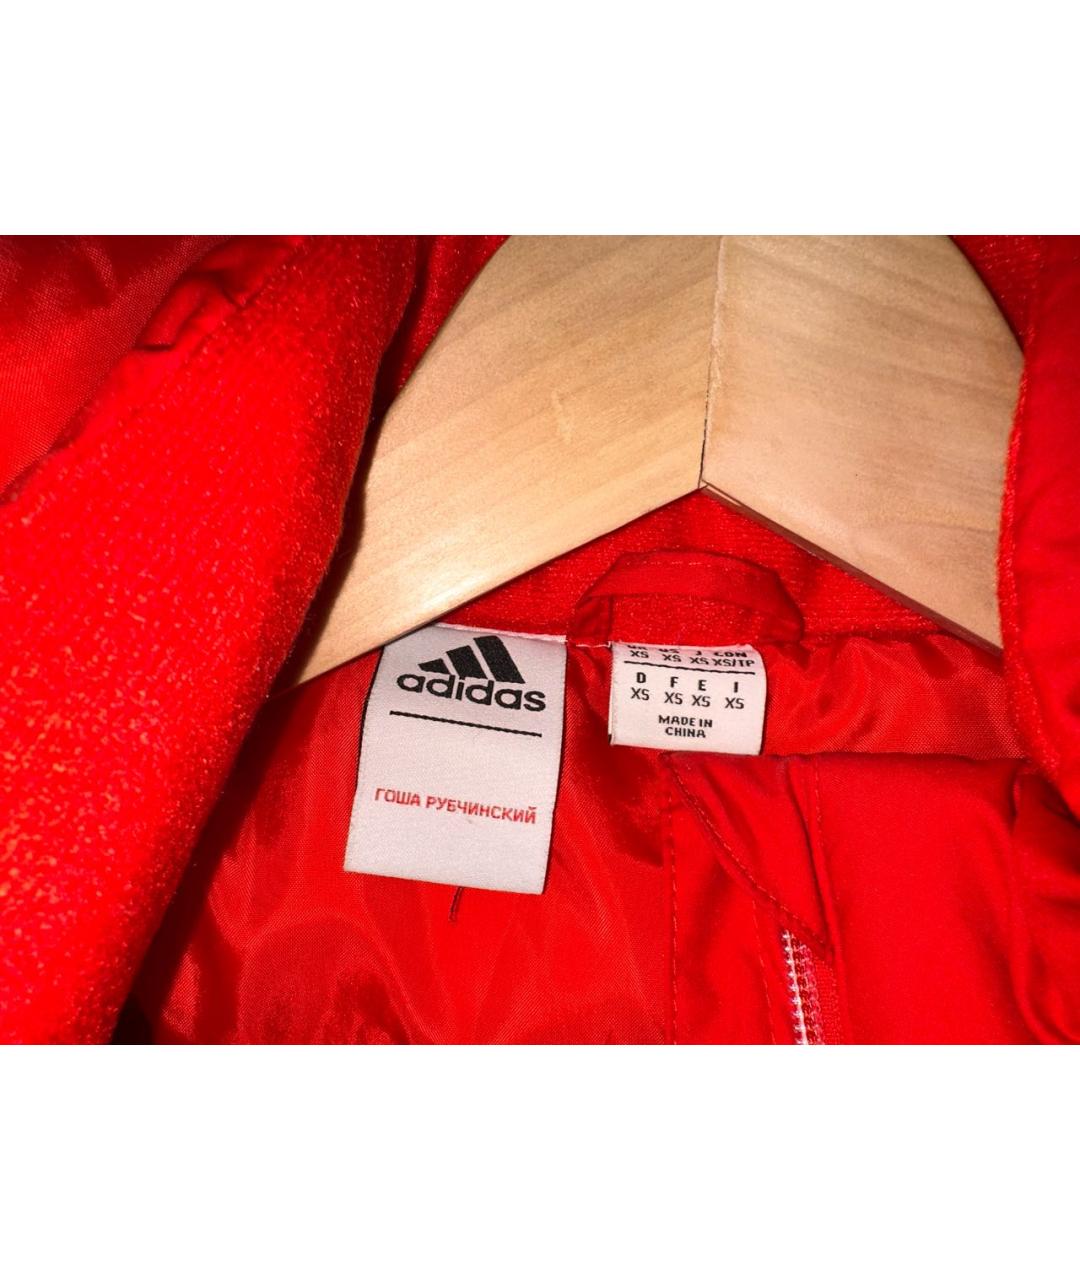 GOSHA RUBCHINSKIY Красная полиэстеровая куртка, фото 4